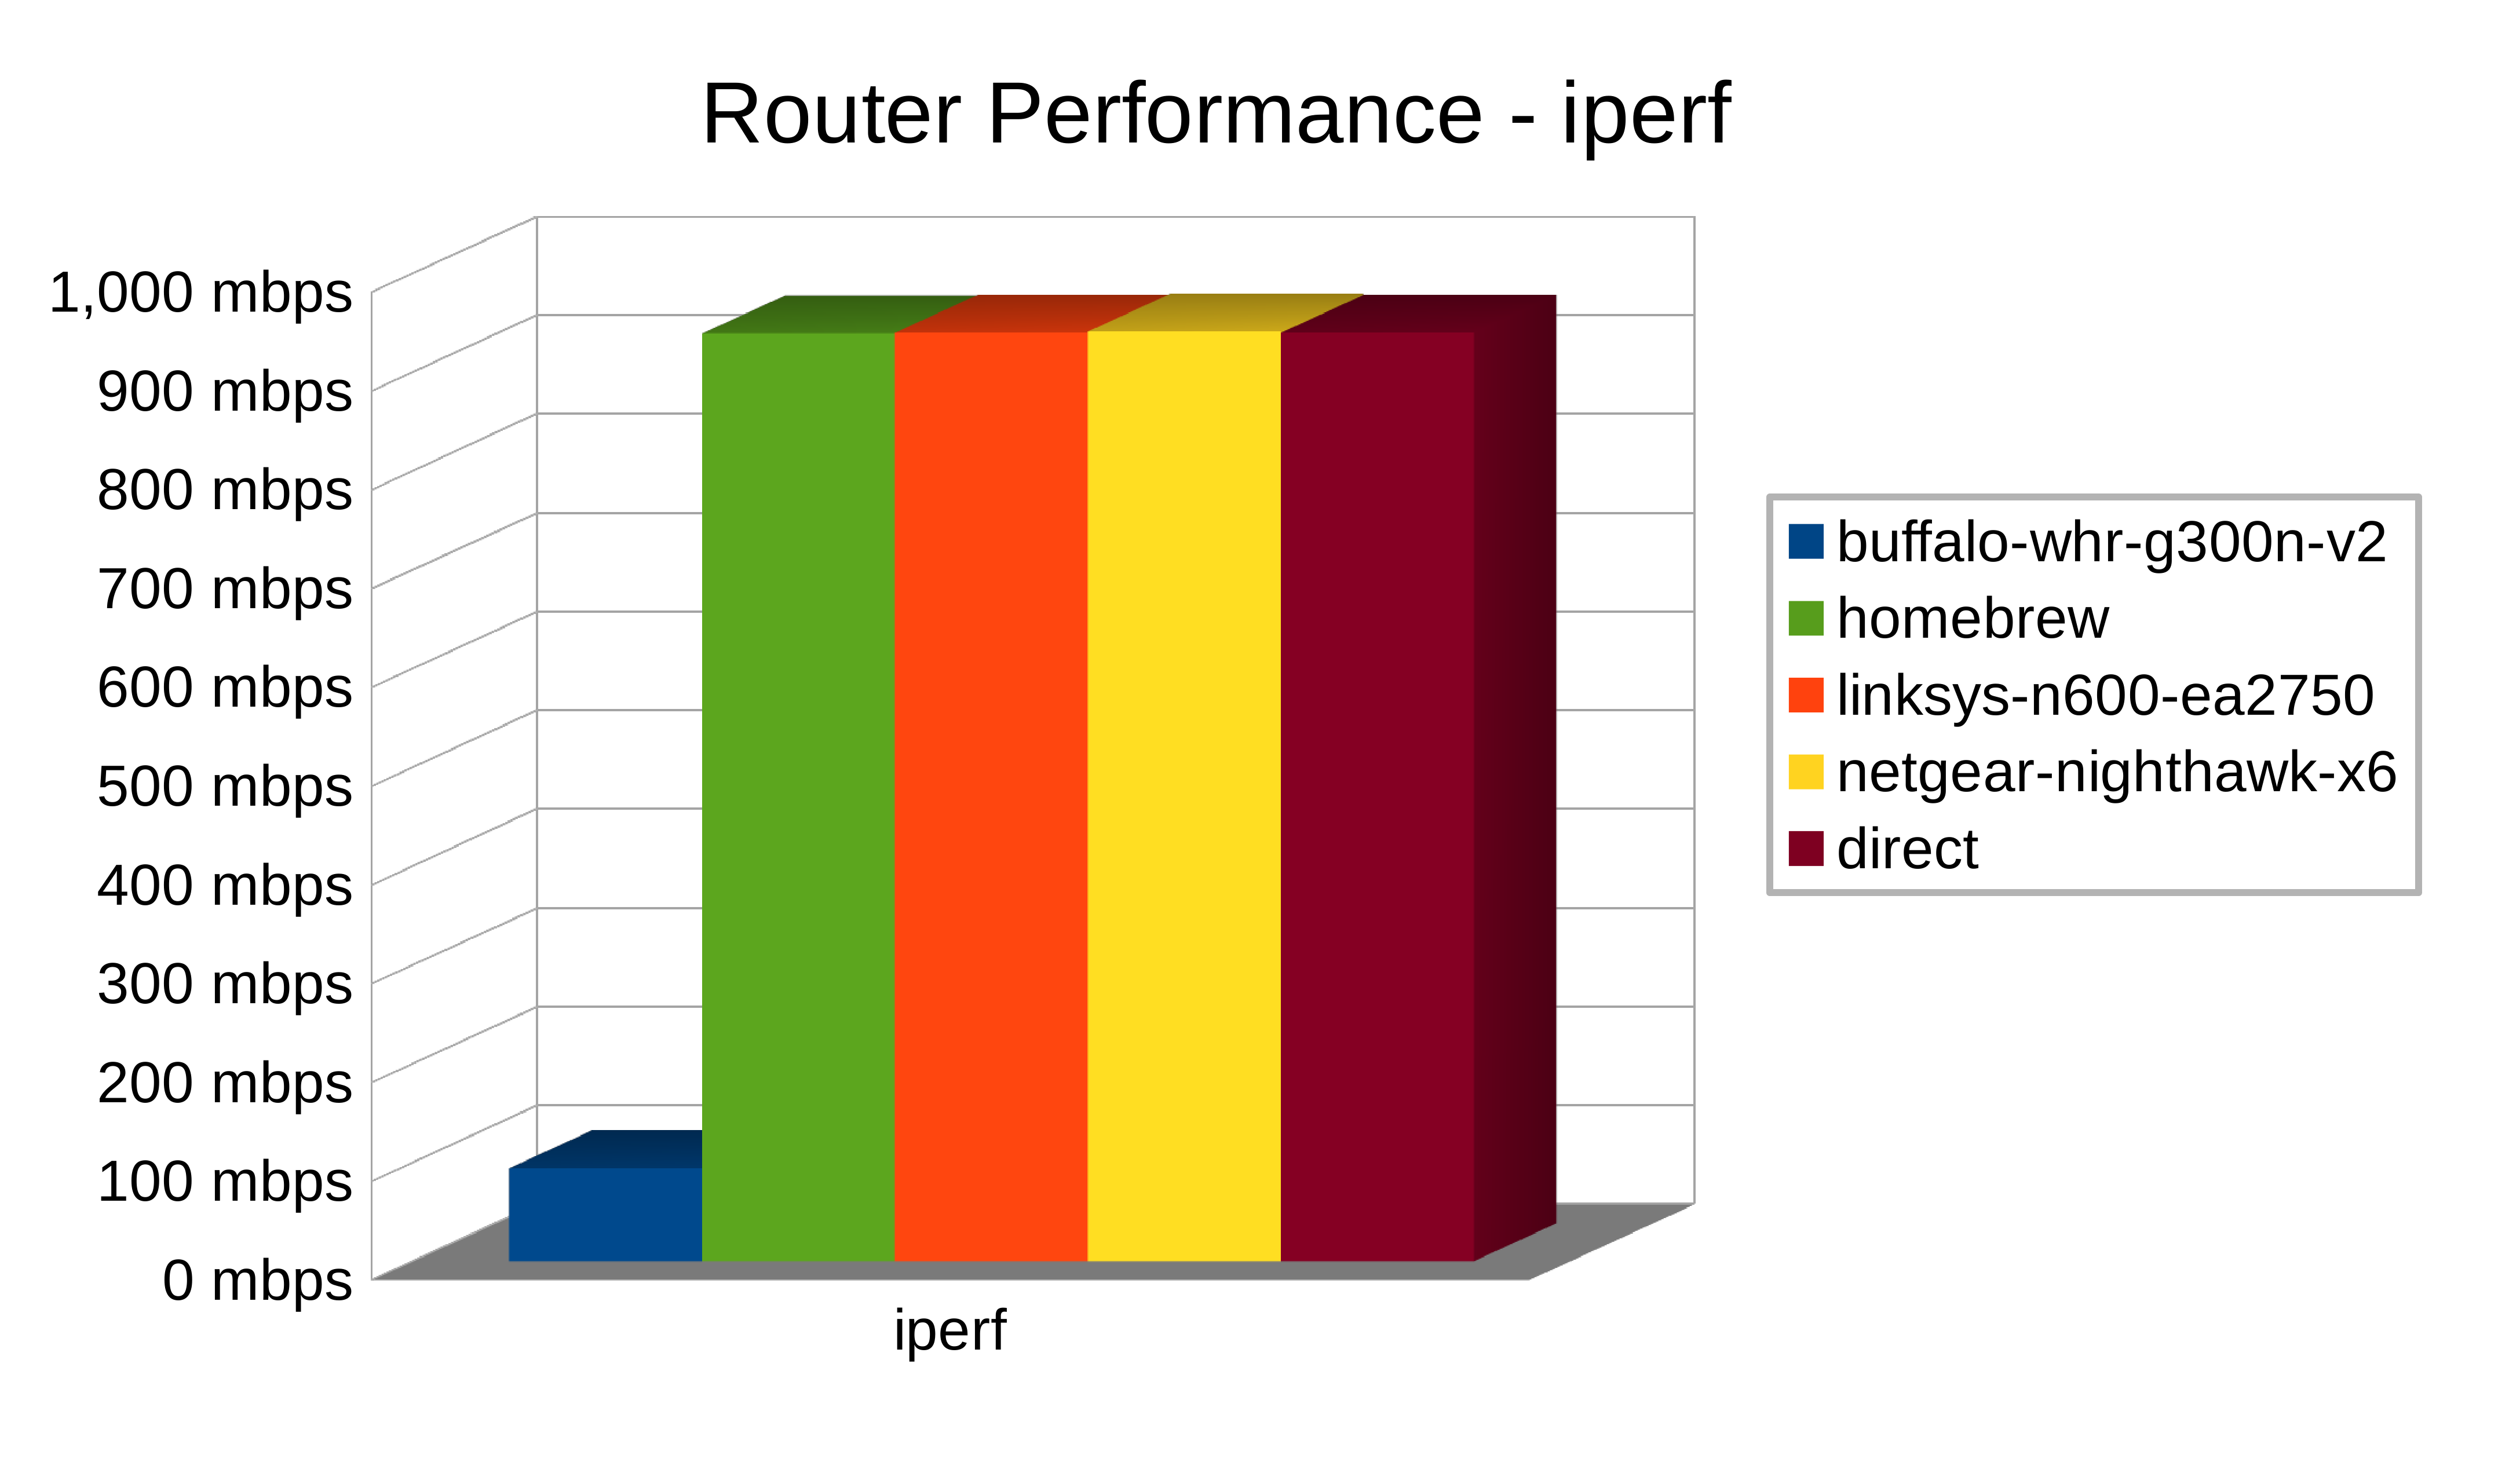 Cisco Router Throughput Chart